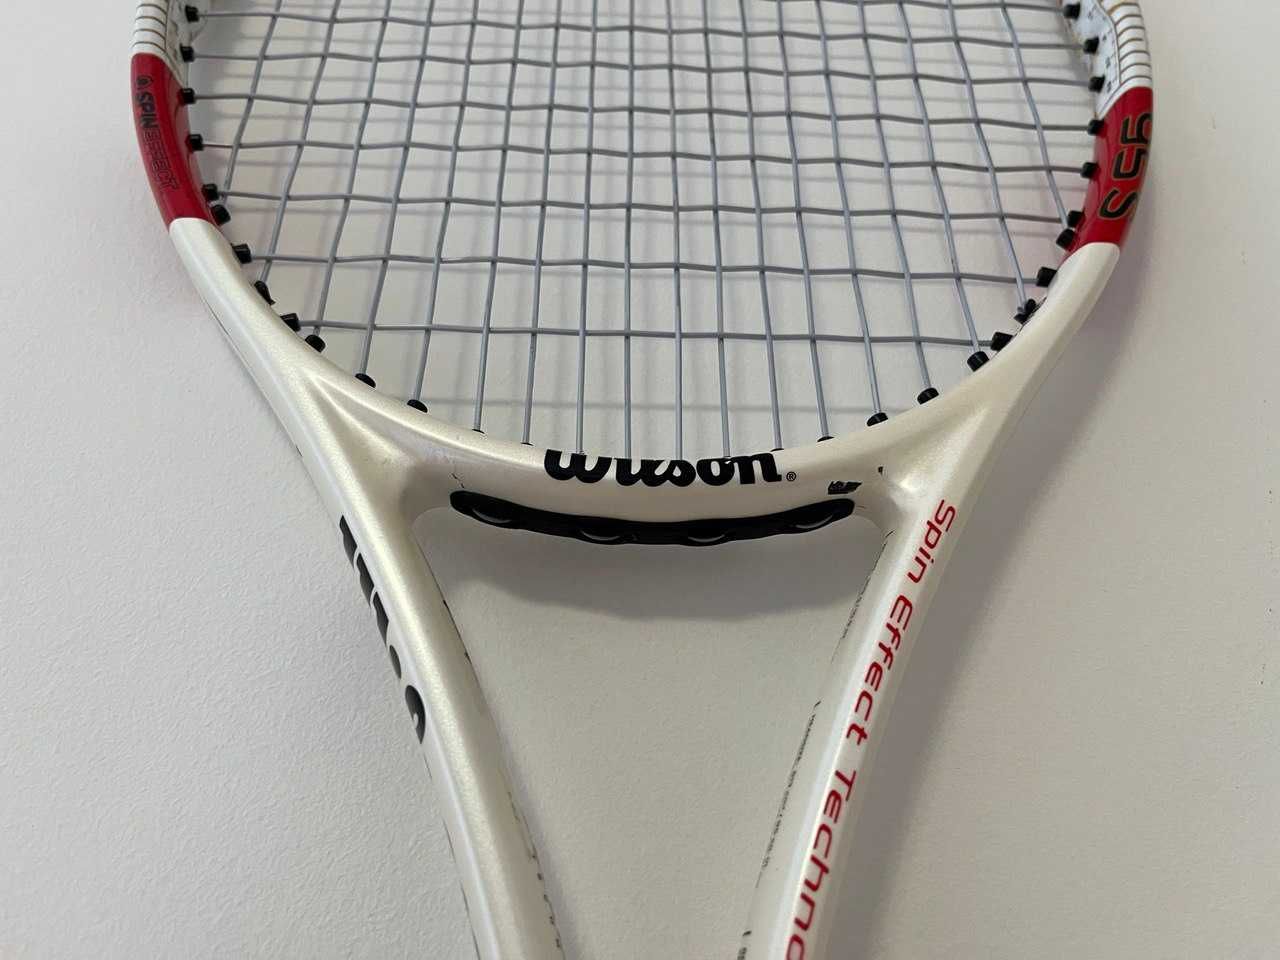 Wilson Six.One 95s тенісна ракетка (ручка 4)